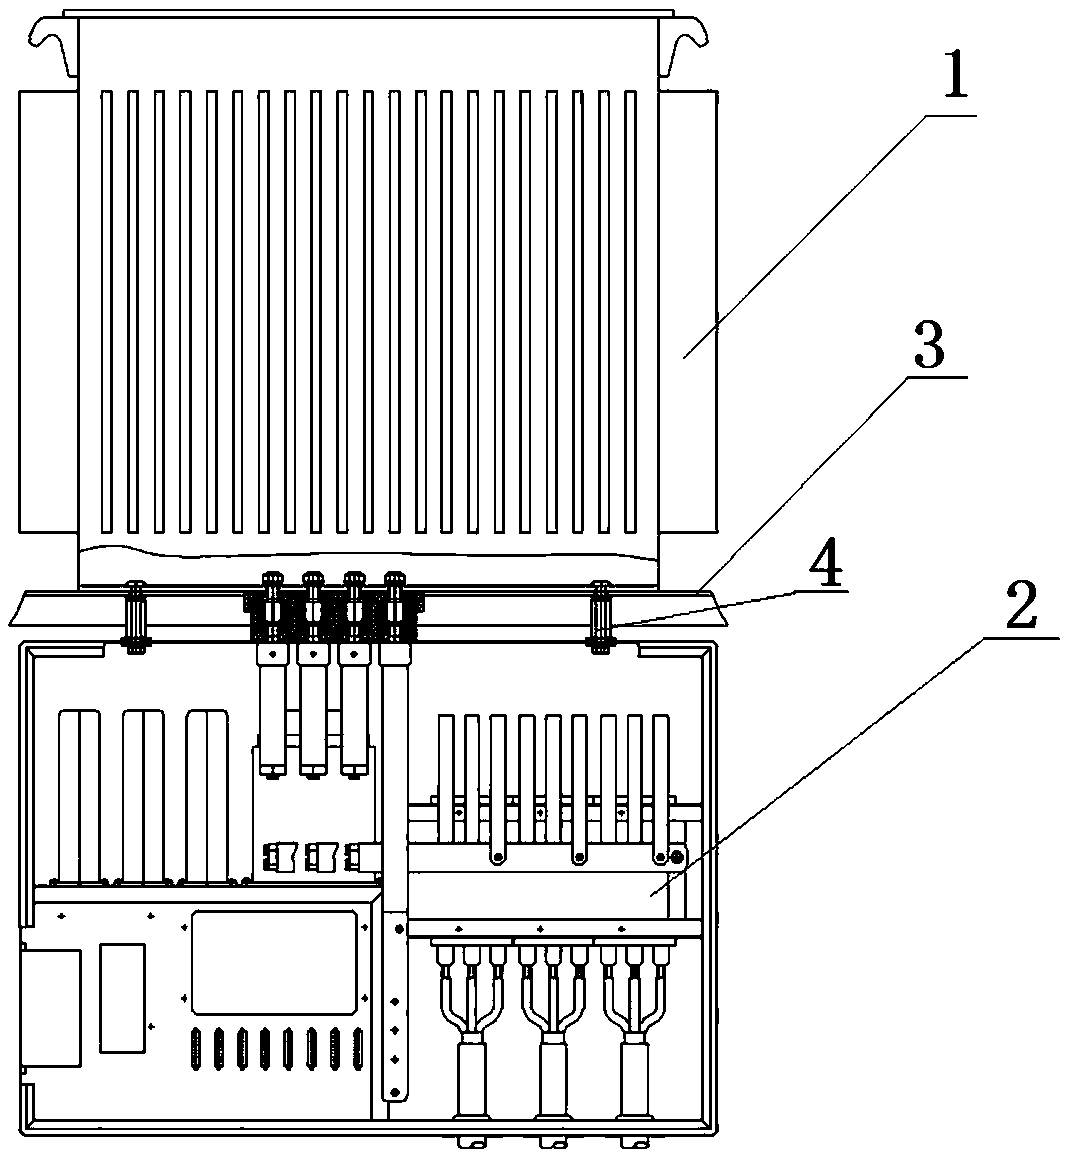 Transformer, power distribution box and power distribution area